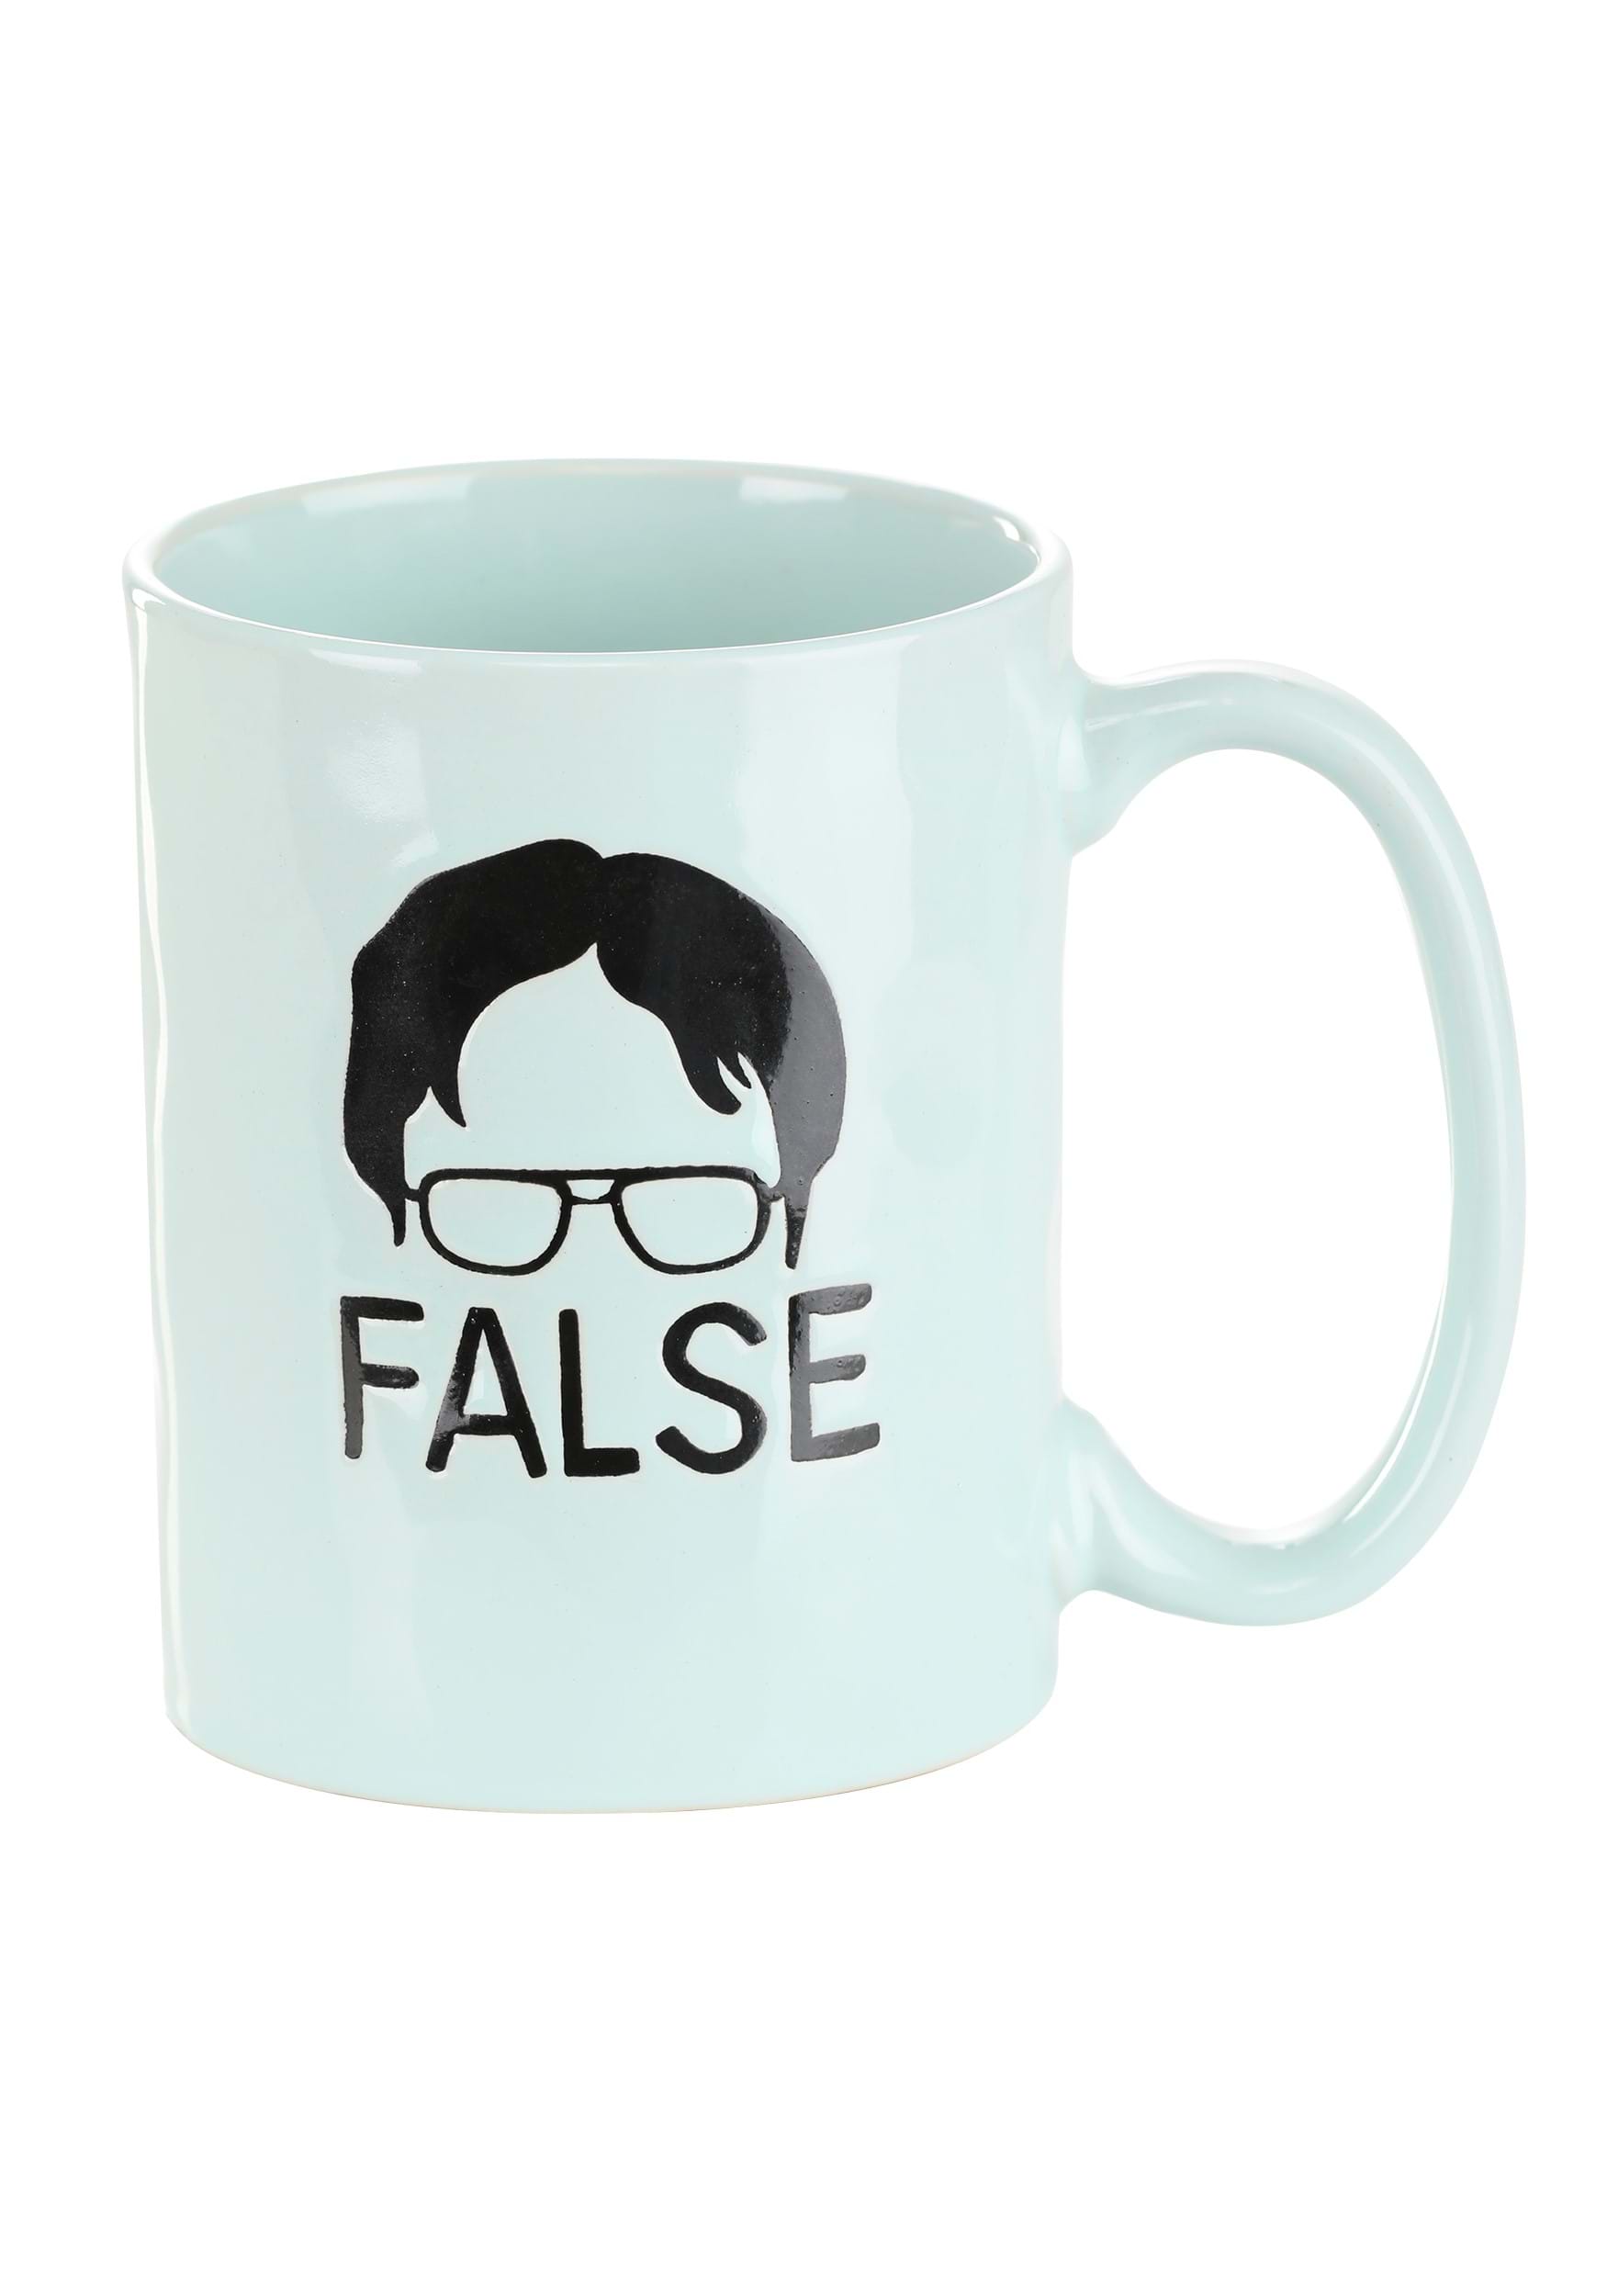 The Office Dwight Schrute "False" 15oz Ceramic Mug